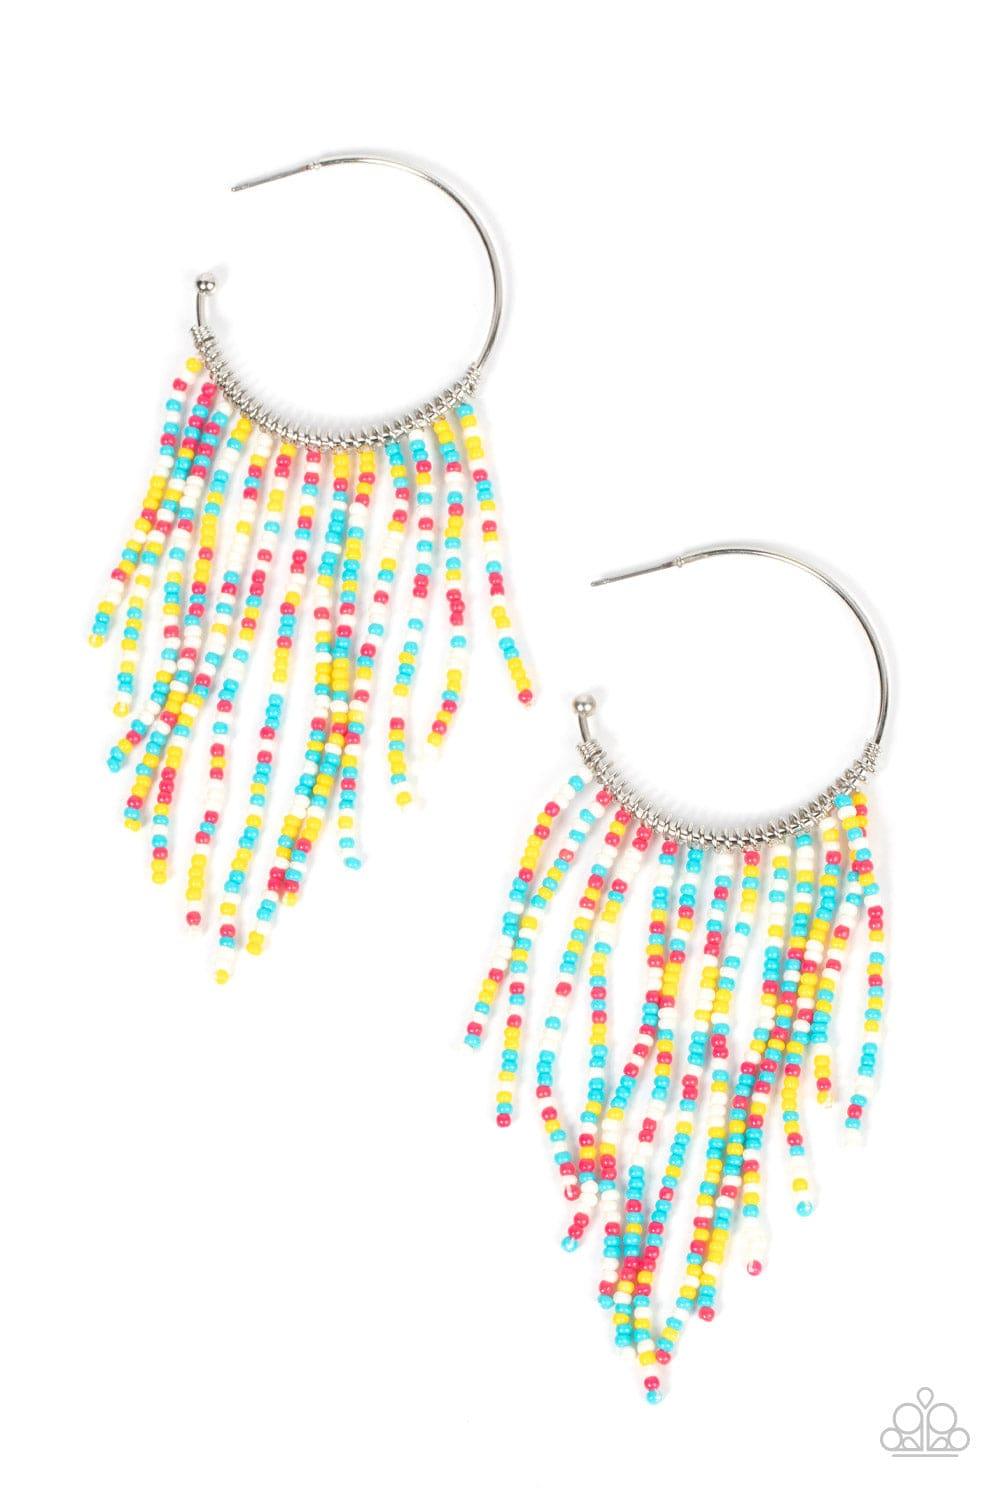 Paparazzi Accessories - Saguaro Breeze - Multicolor Hoop Earrings - Bling by JessieK